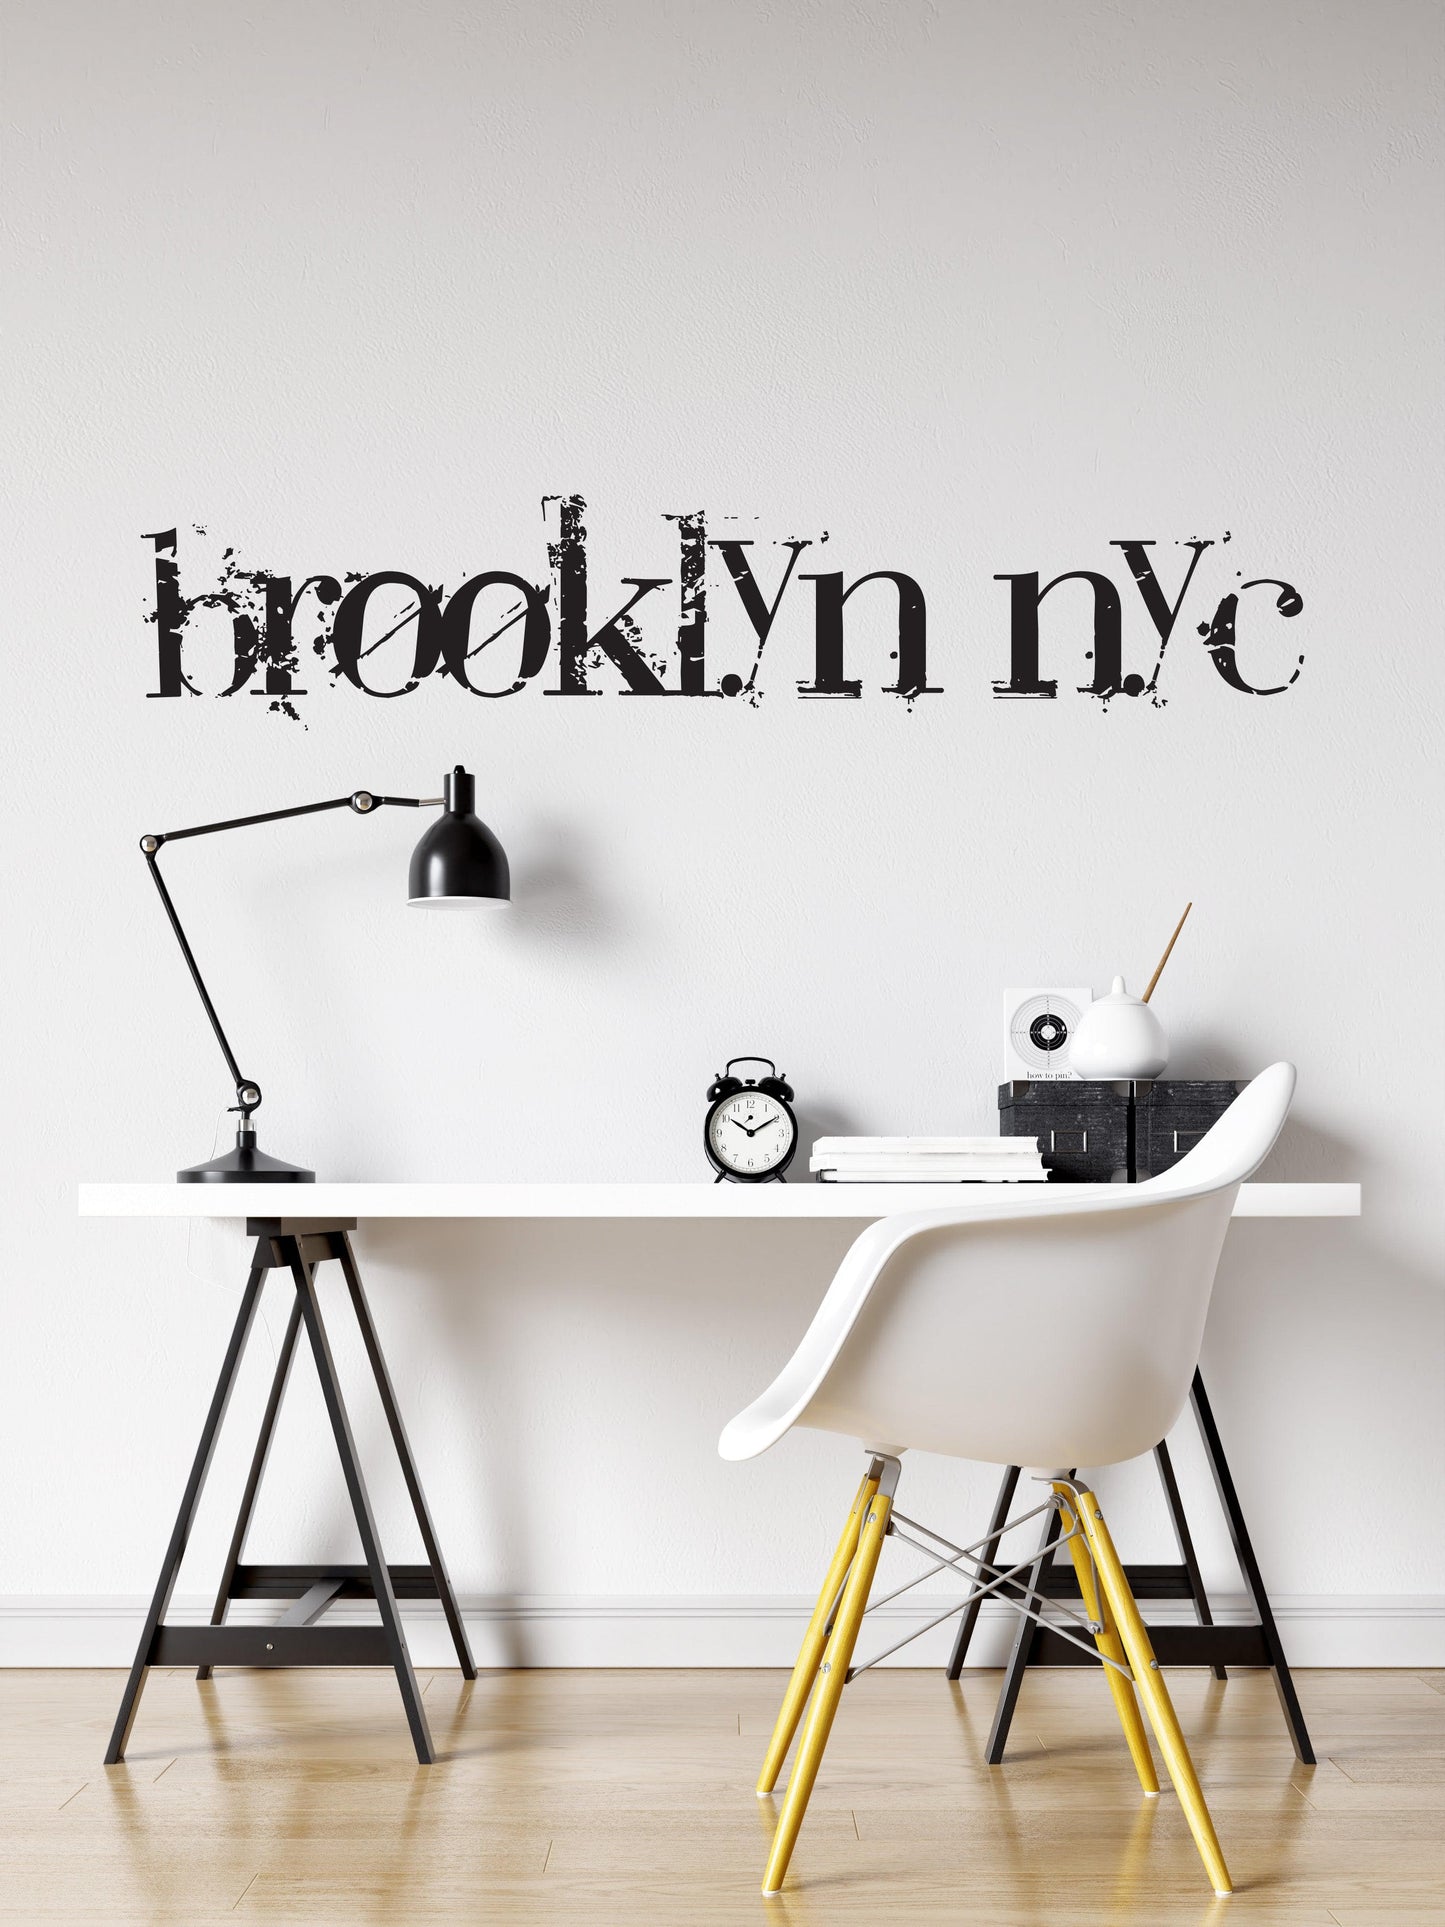 Brooklyn NYC Text Vinyl Wall Decal Sticker. #T102